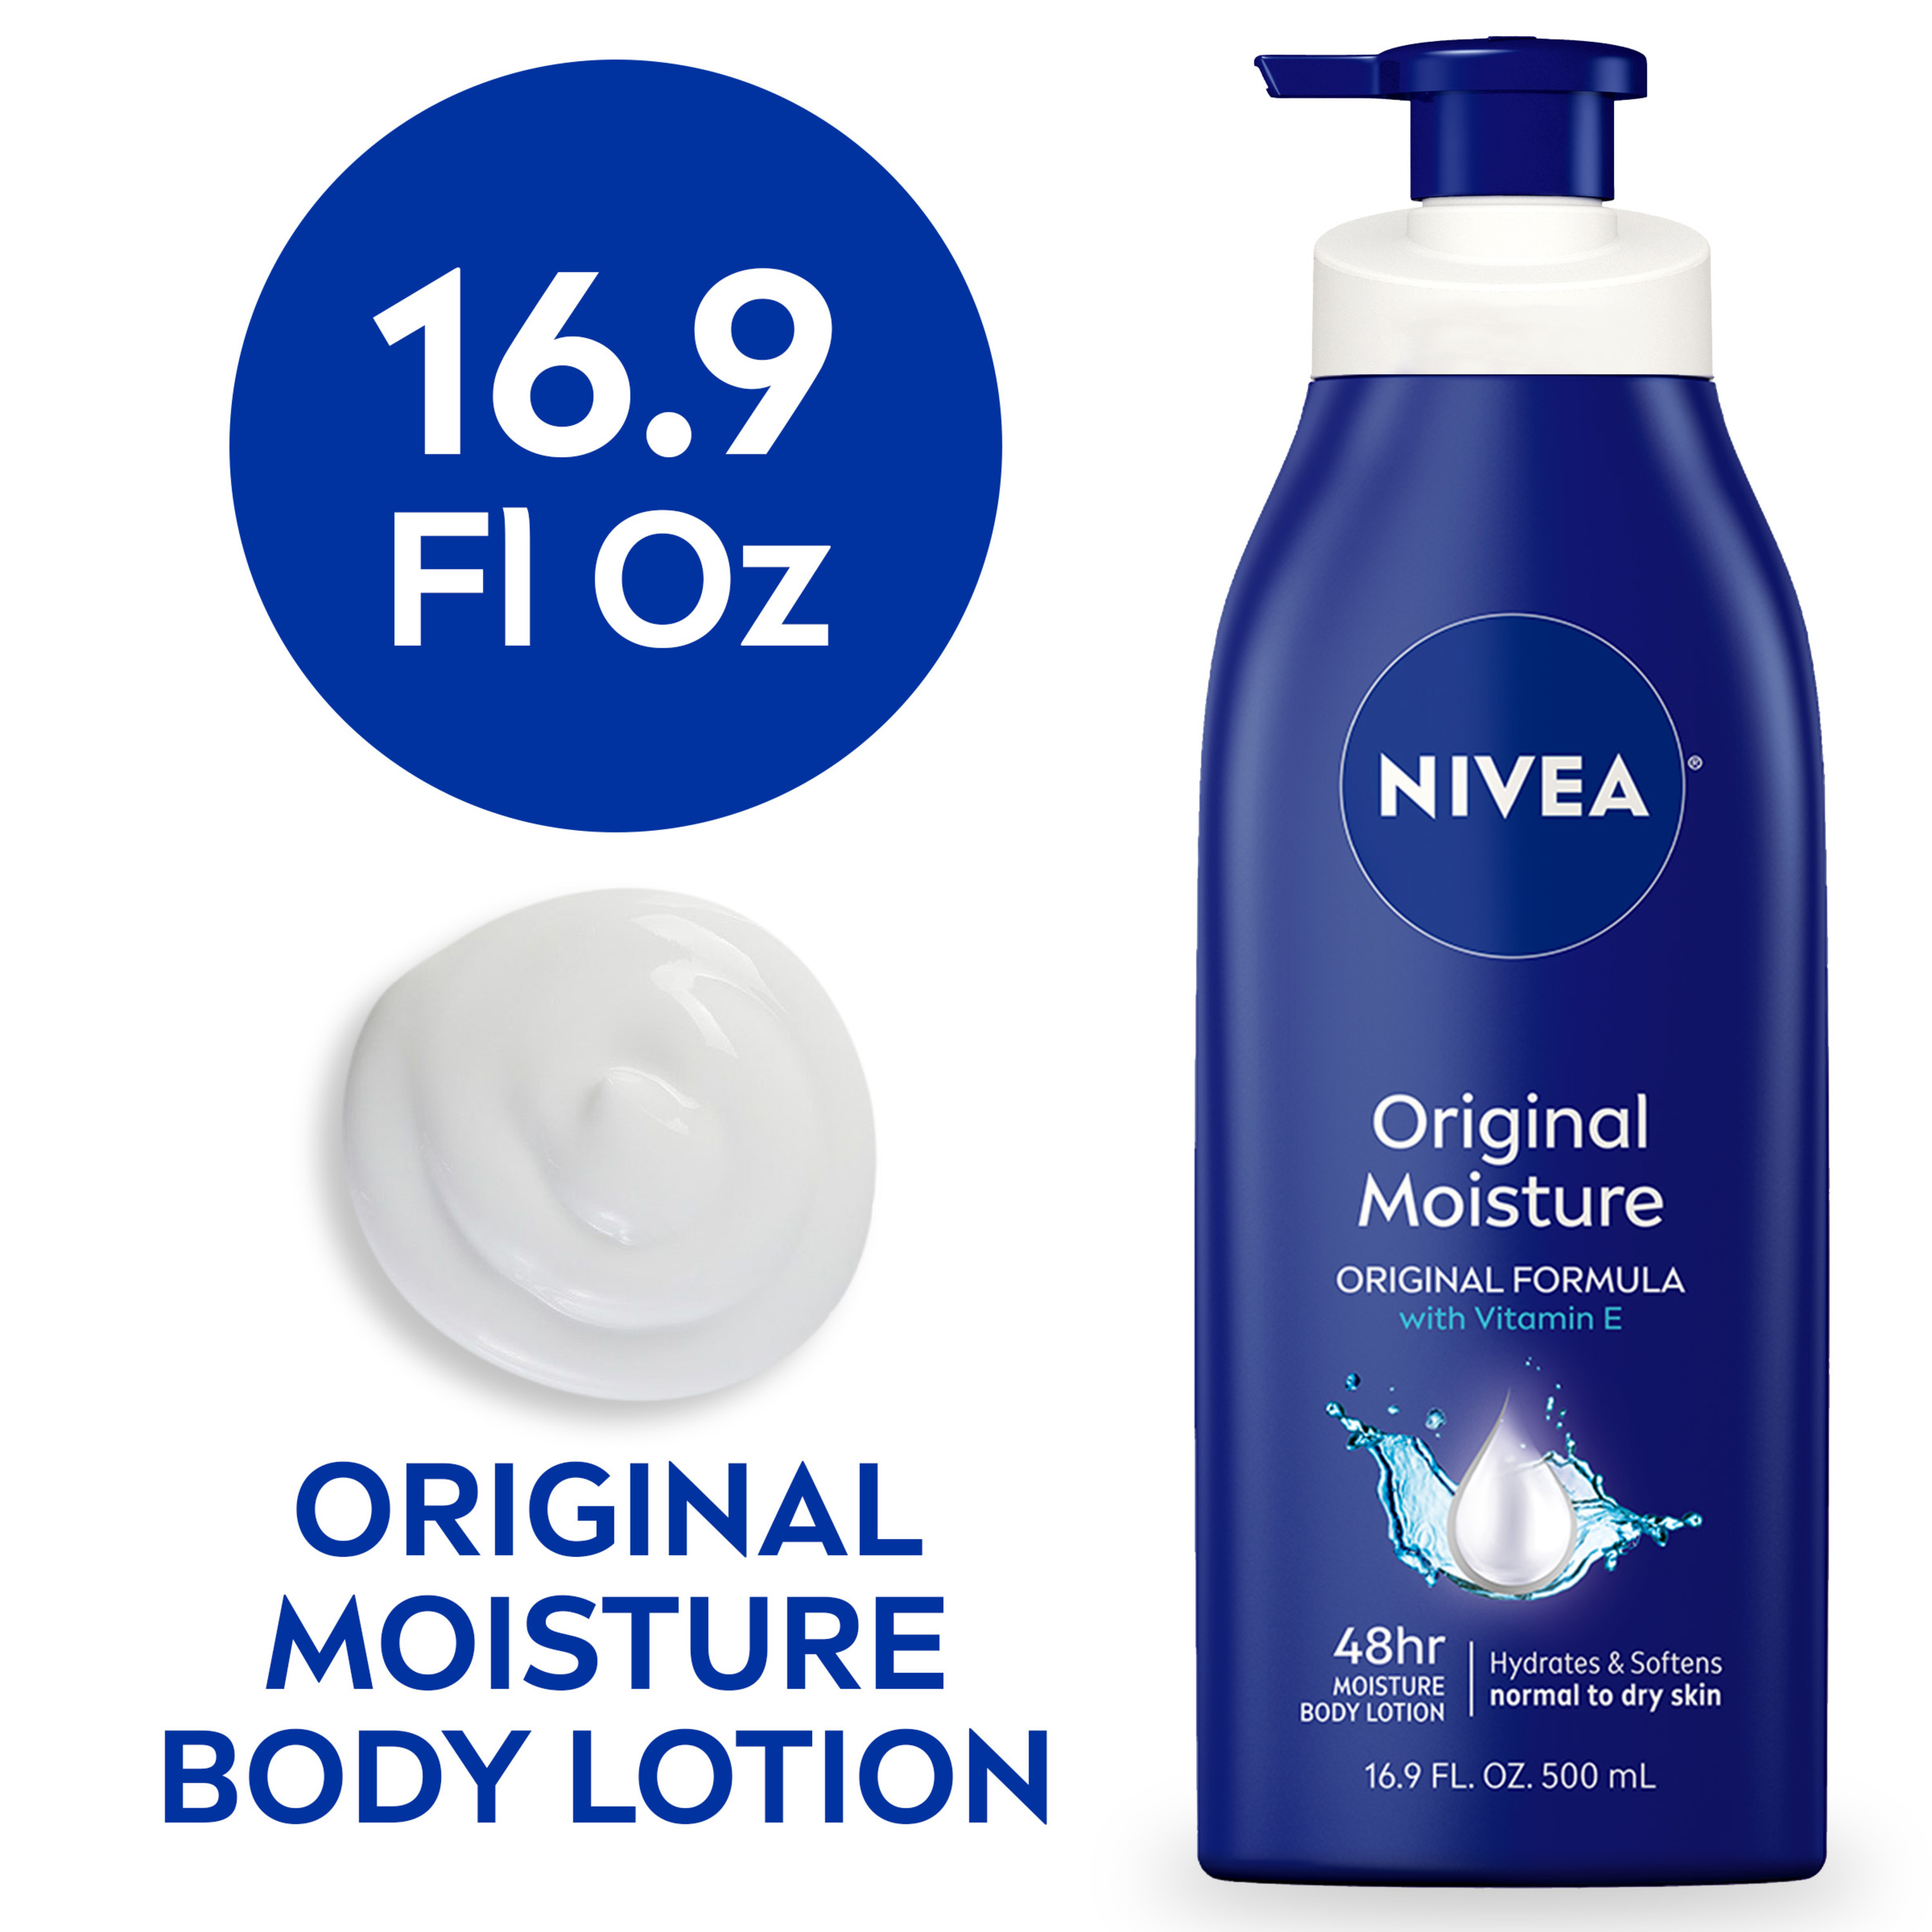 NIVEA Original Moisture Body Lotion with Vitamin E, 16.9 Fl Oz Pump Bottle - image 1 of 10